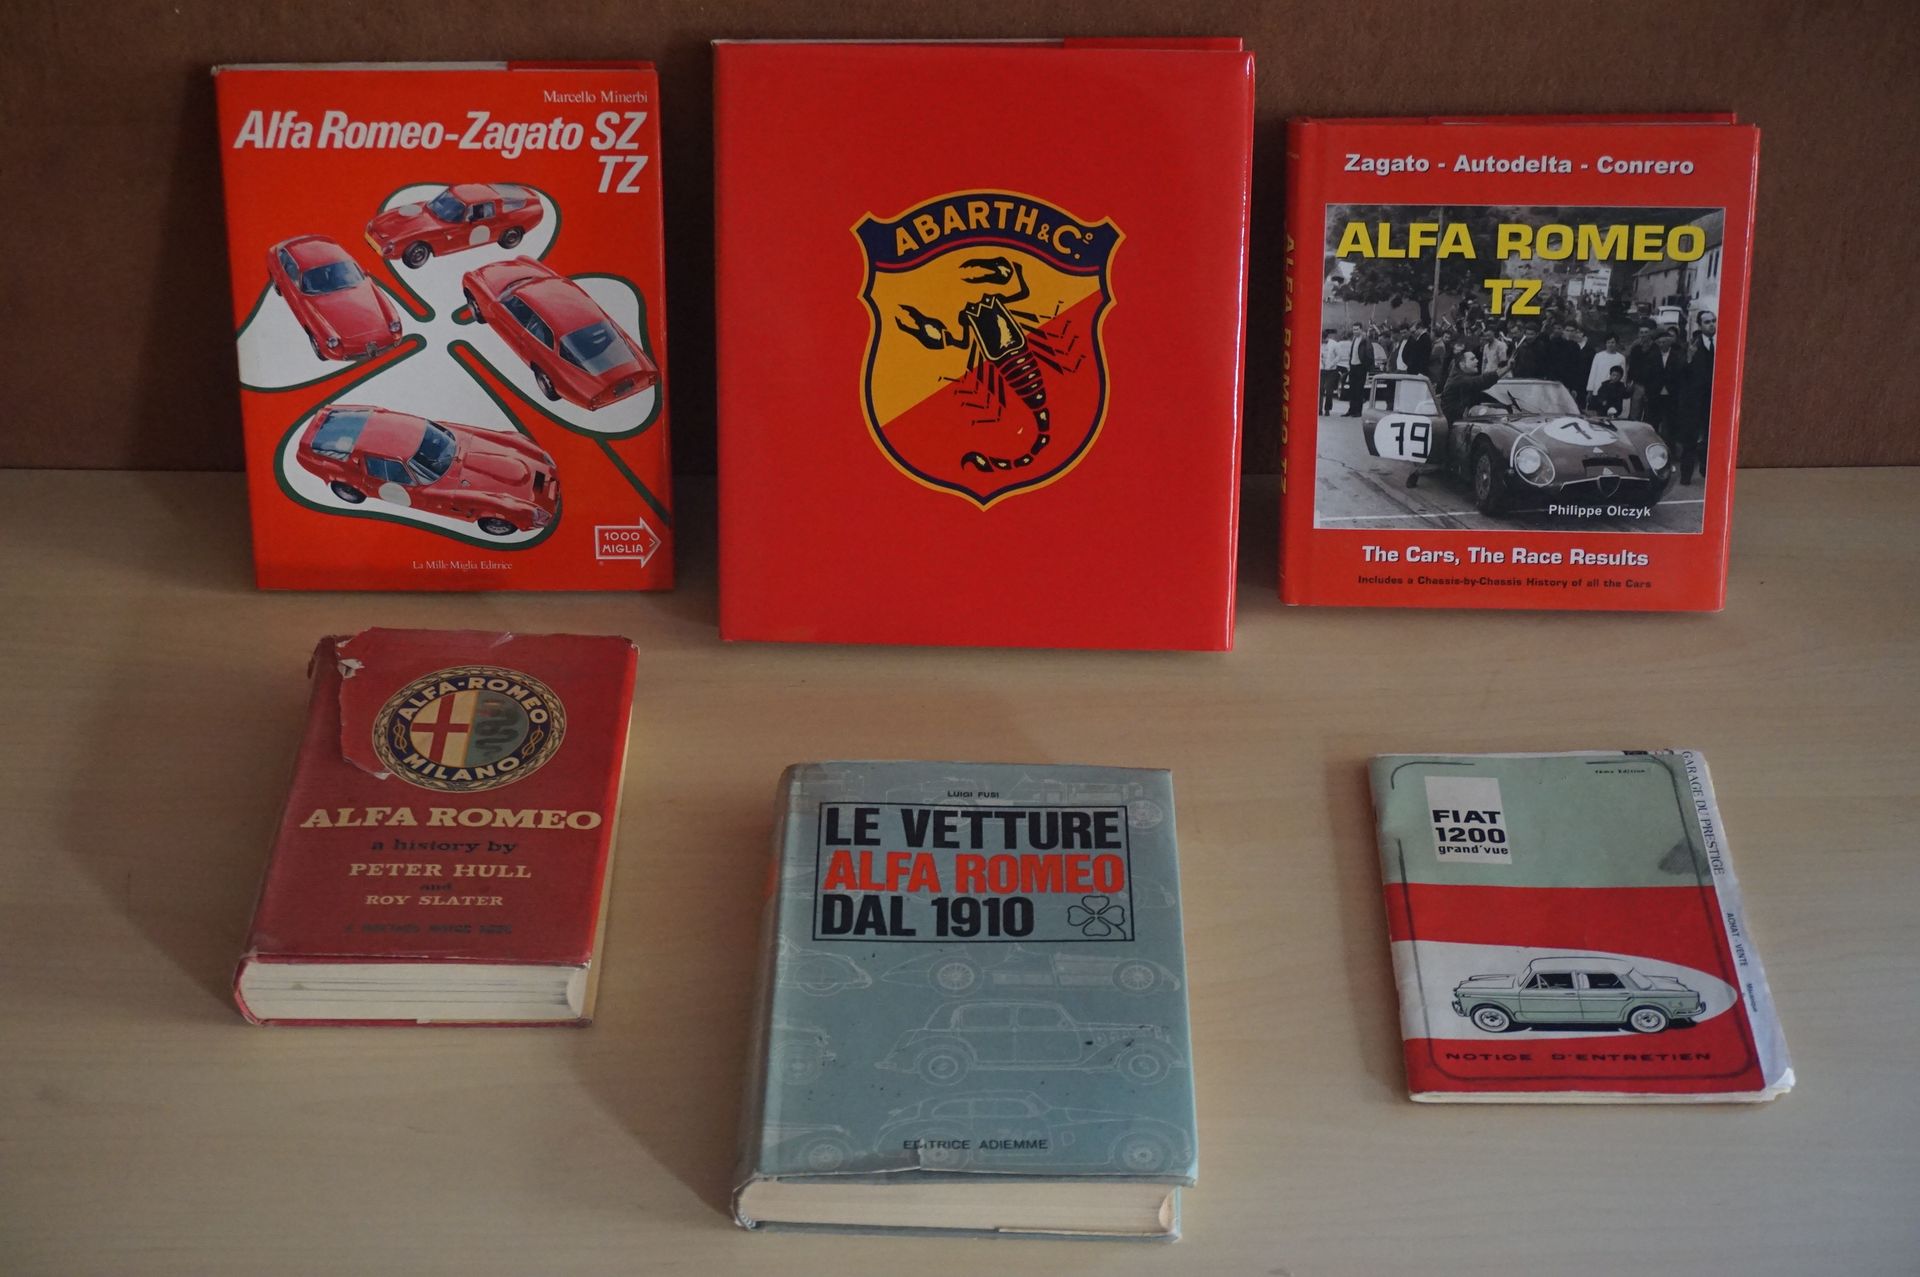 Null Lot von 6 Büchern 
- Alfa Romeo - Zagato SZ / TZ
- Abarth
- Alfa Romeo TZ
-&hellip;